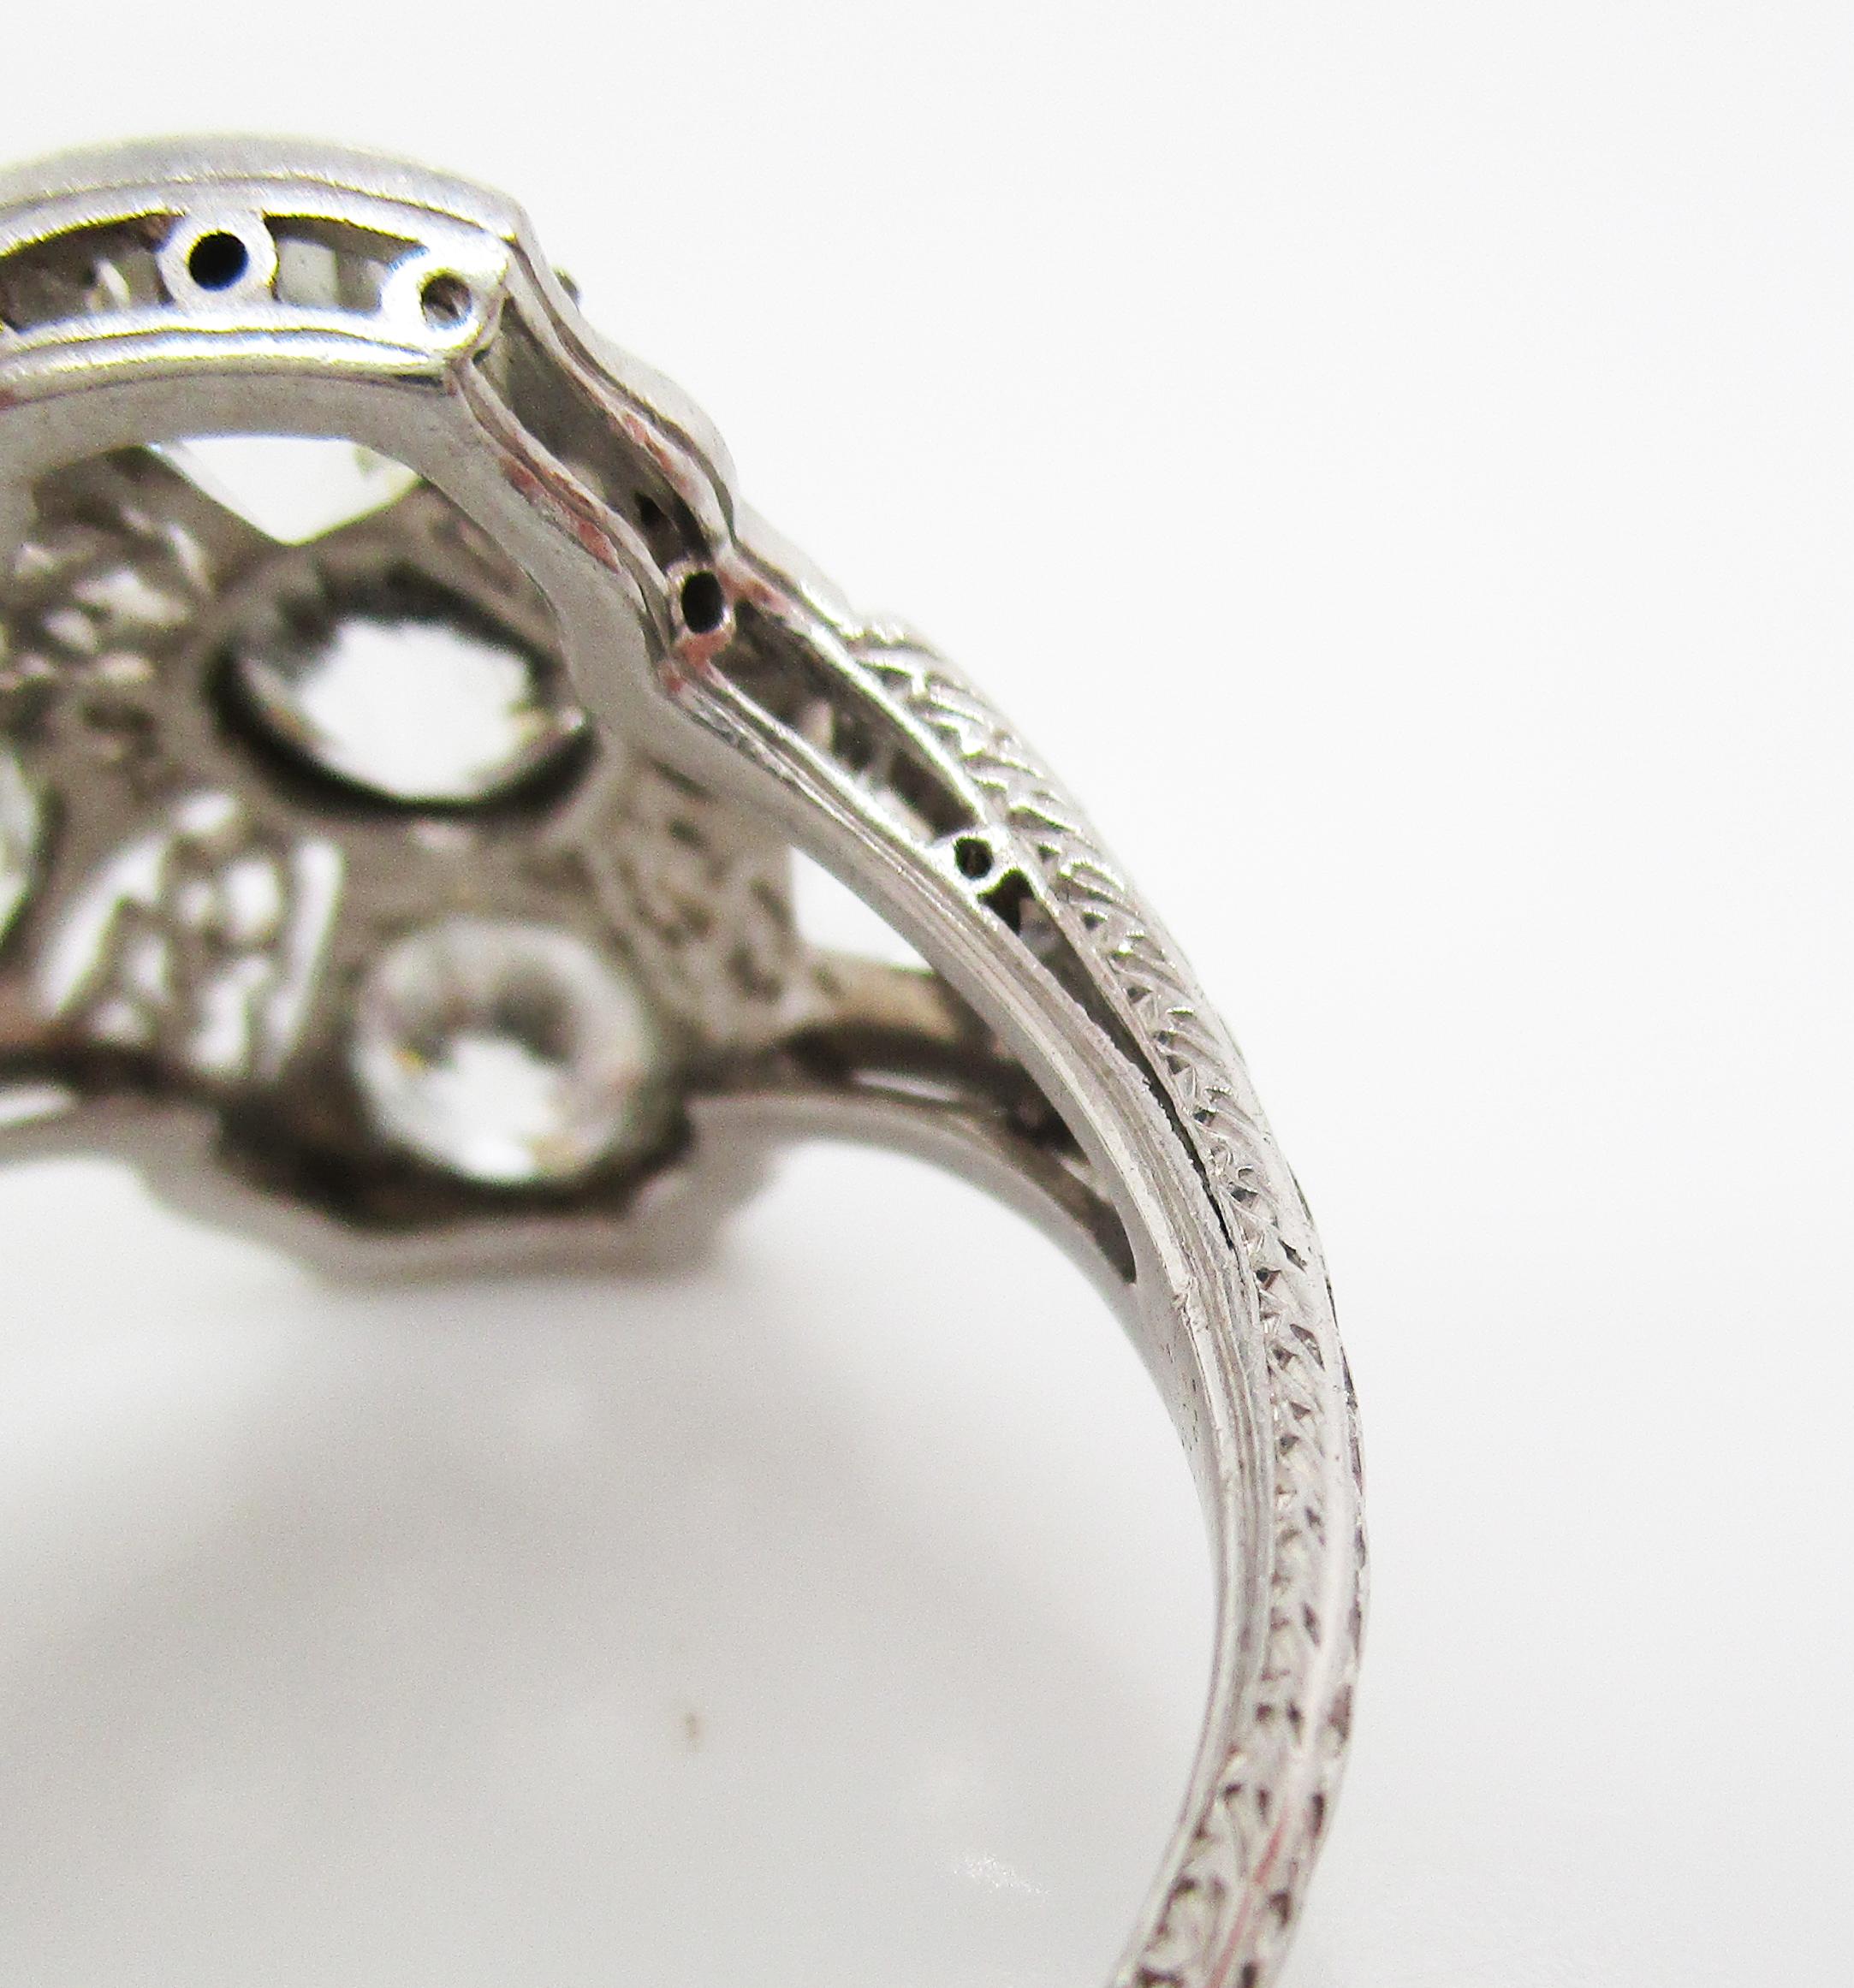 Deco Platinum Filigree 3 Cts. of European Cut Diamond Ring Size 8.5 For Sale 1